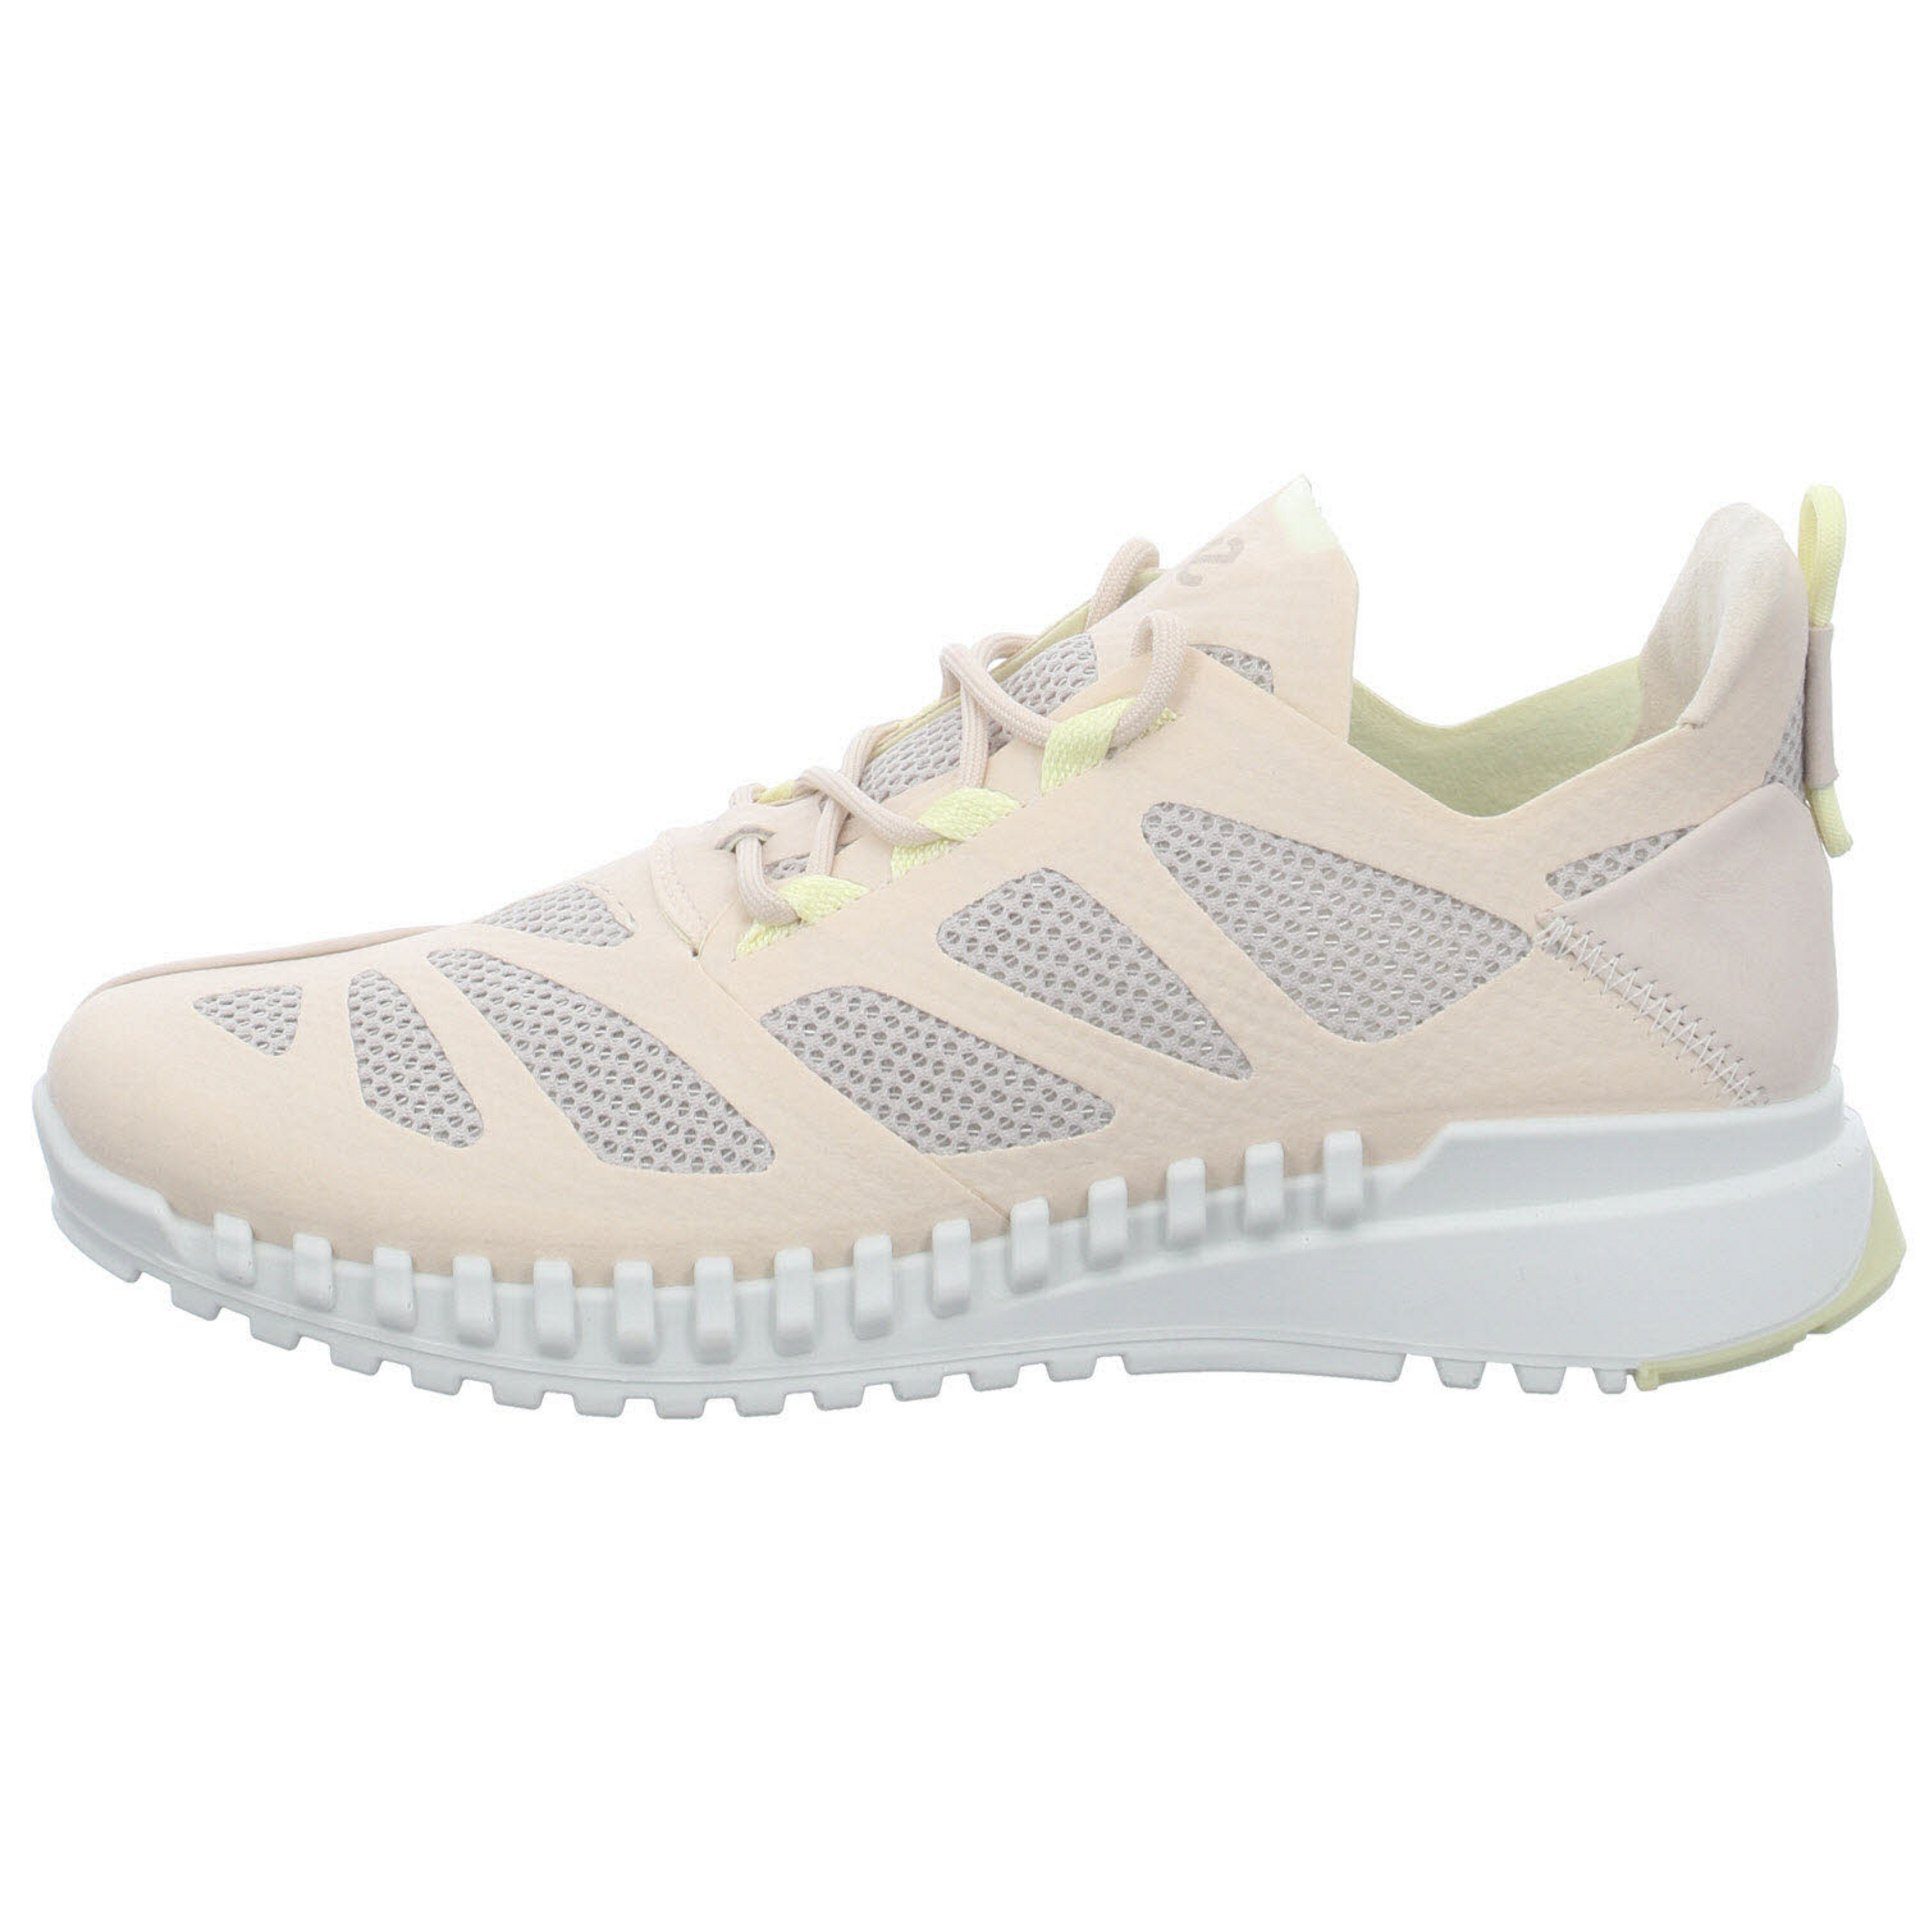 Schnürschuh Zipflex Sneaker Leder-/Textilkombination Ecco limestone/limestone Schuhe Damen Sneaker